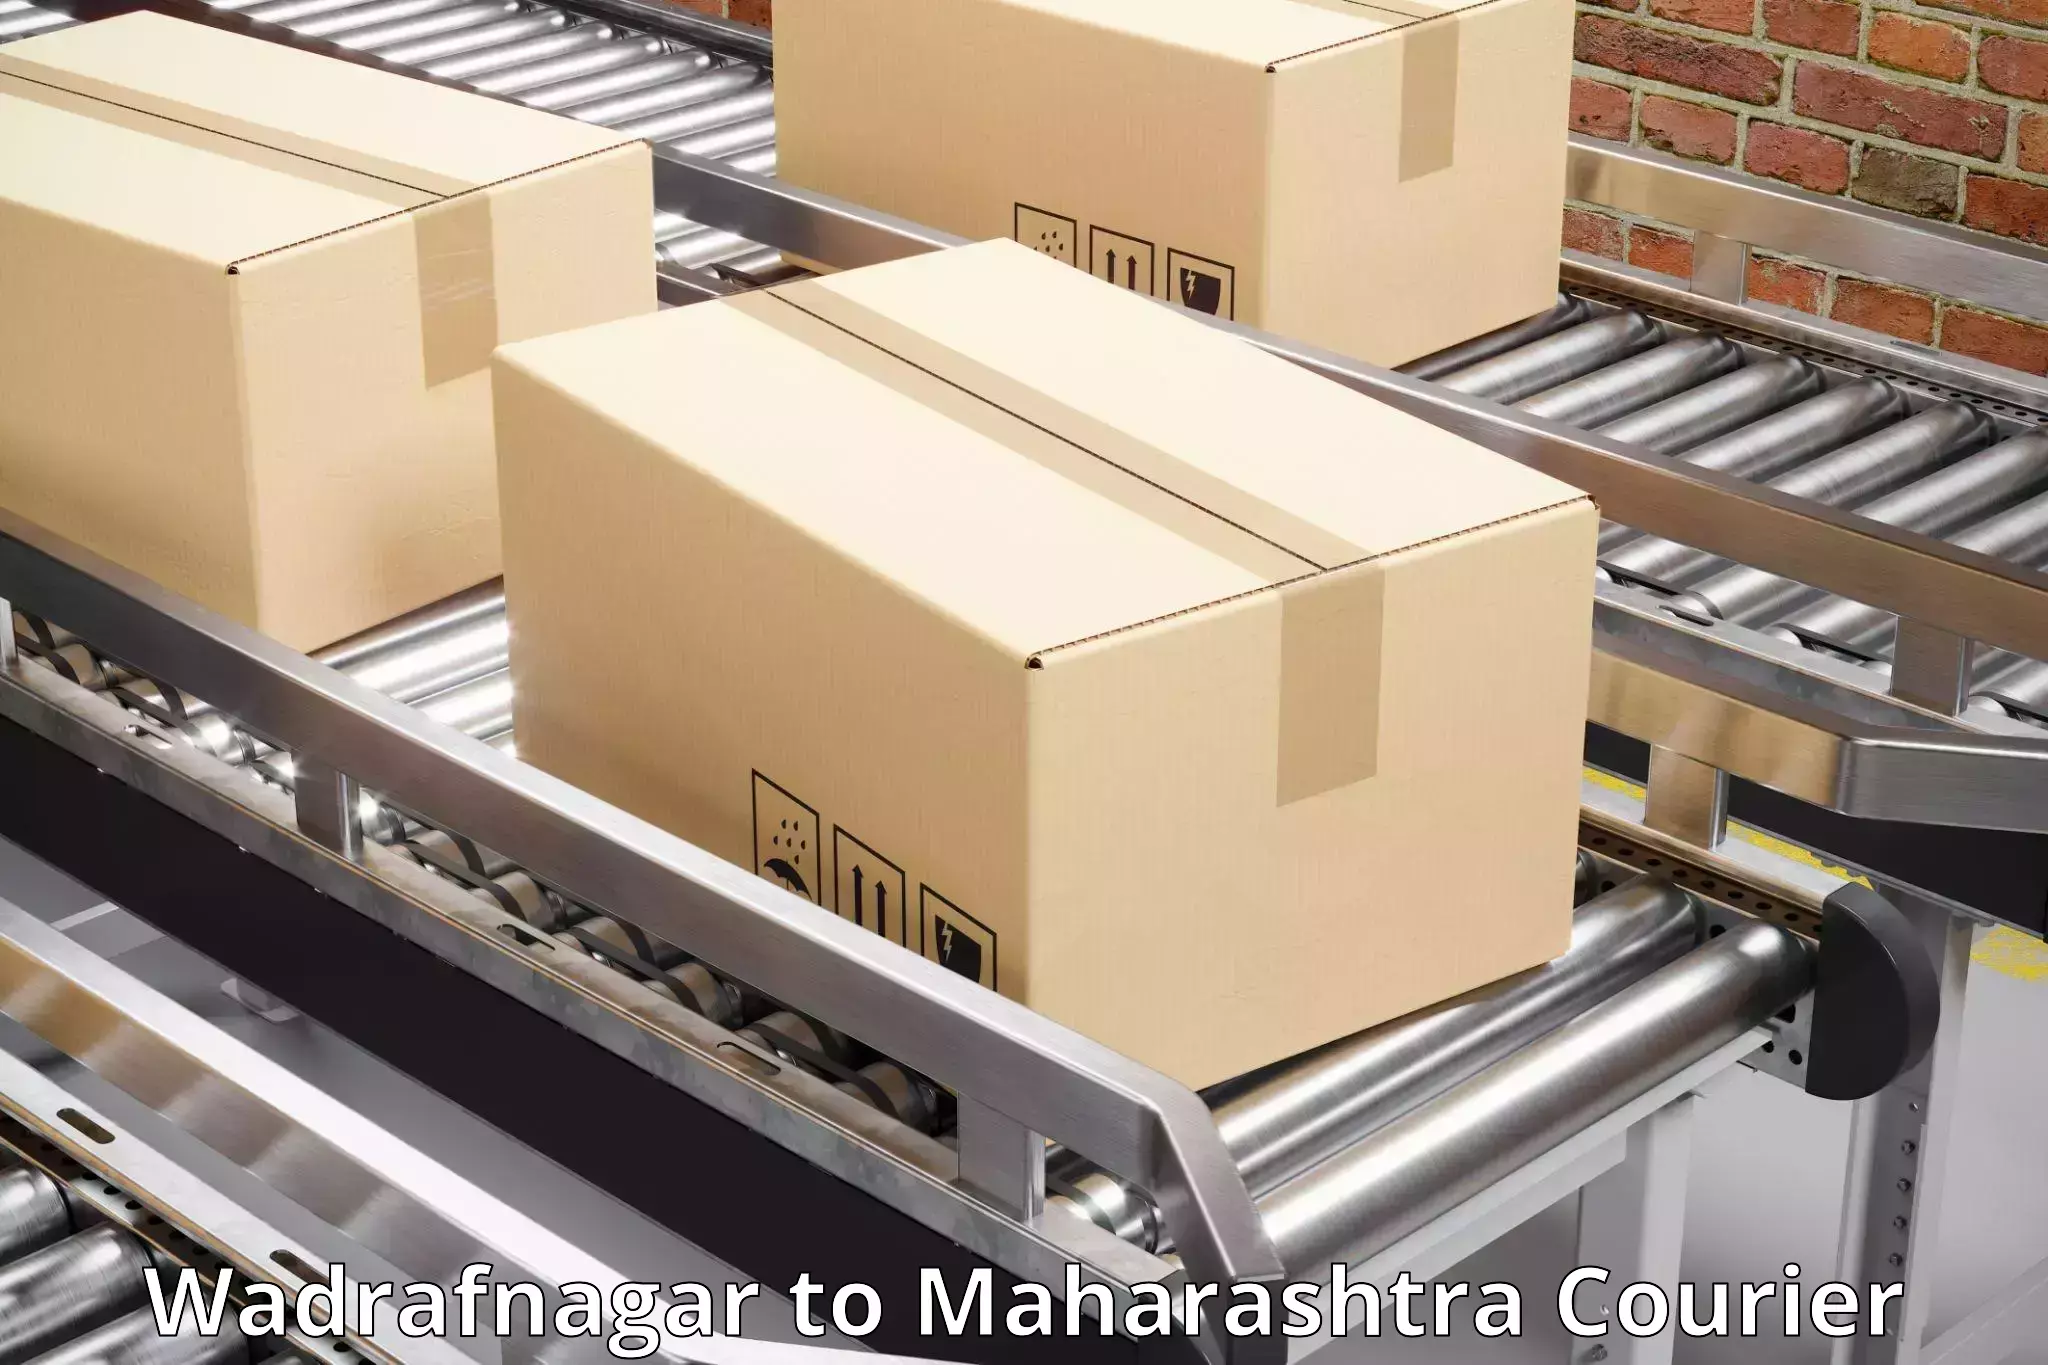 On-demand shipping options Wadrafnagar to Ganpatipule